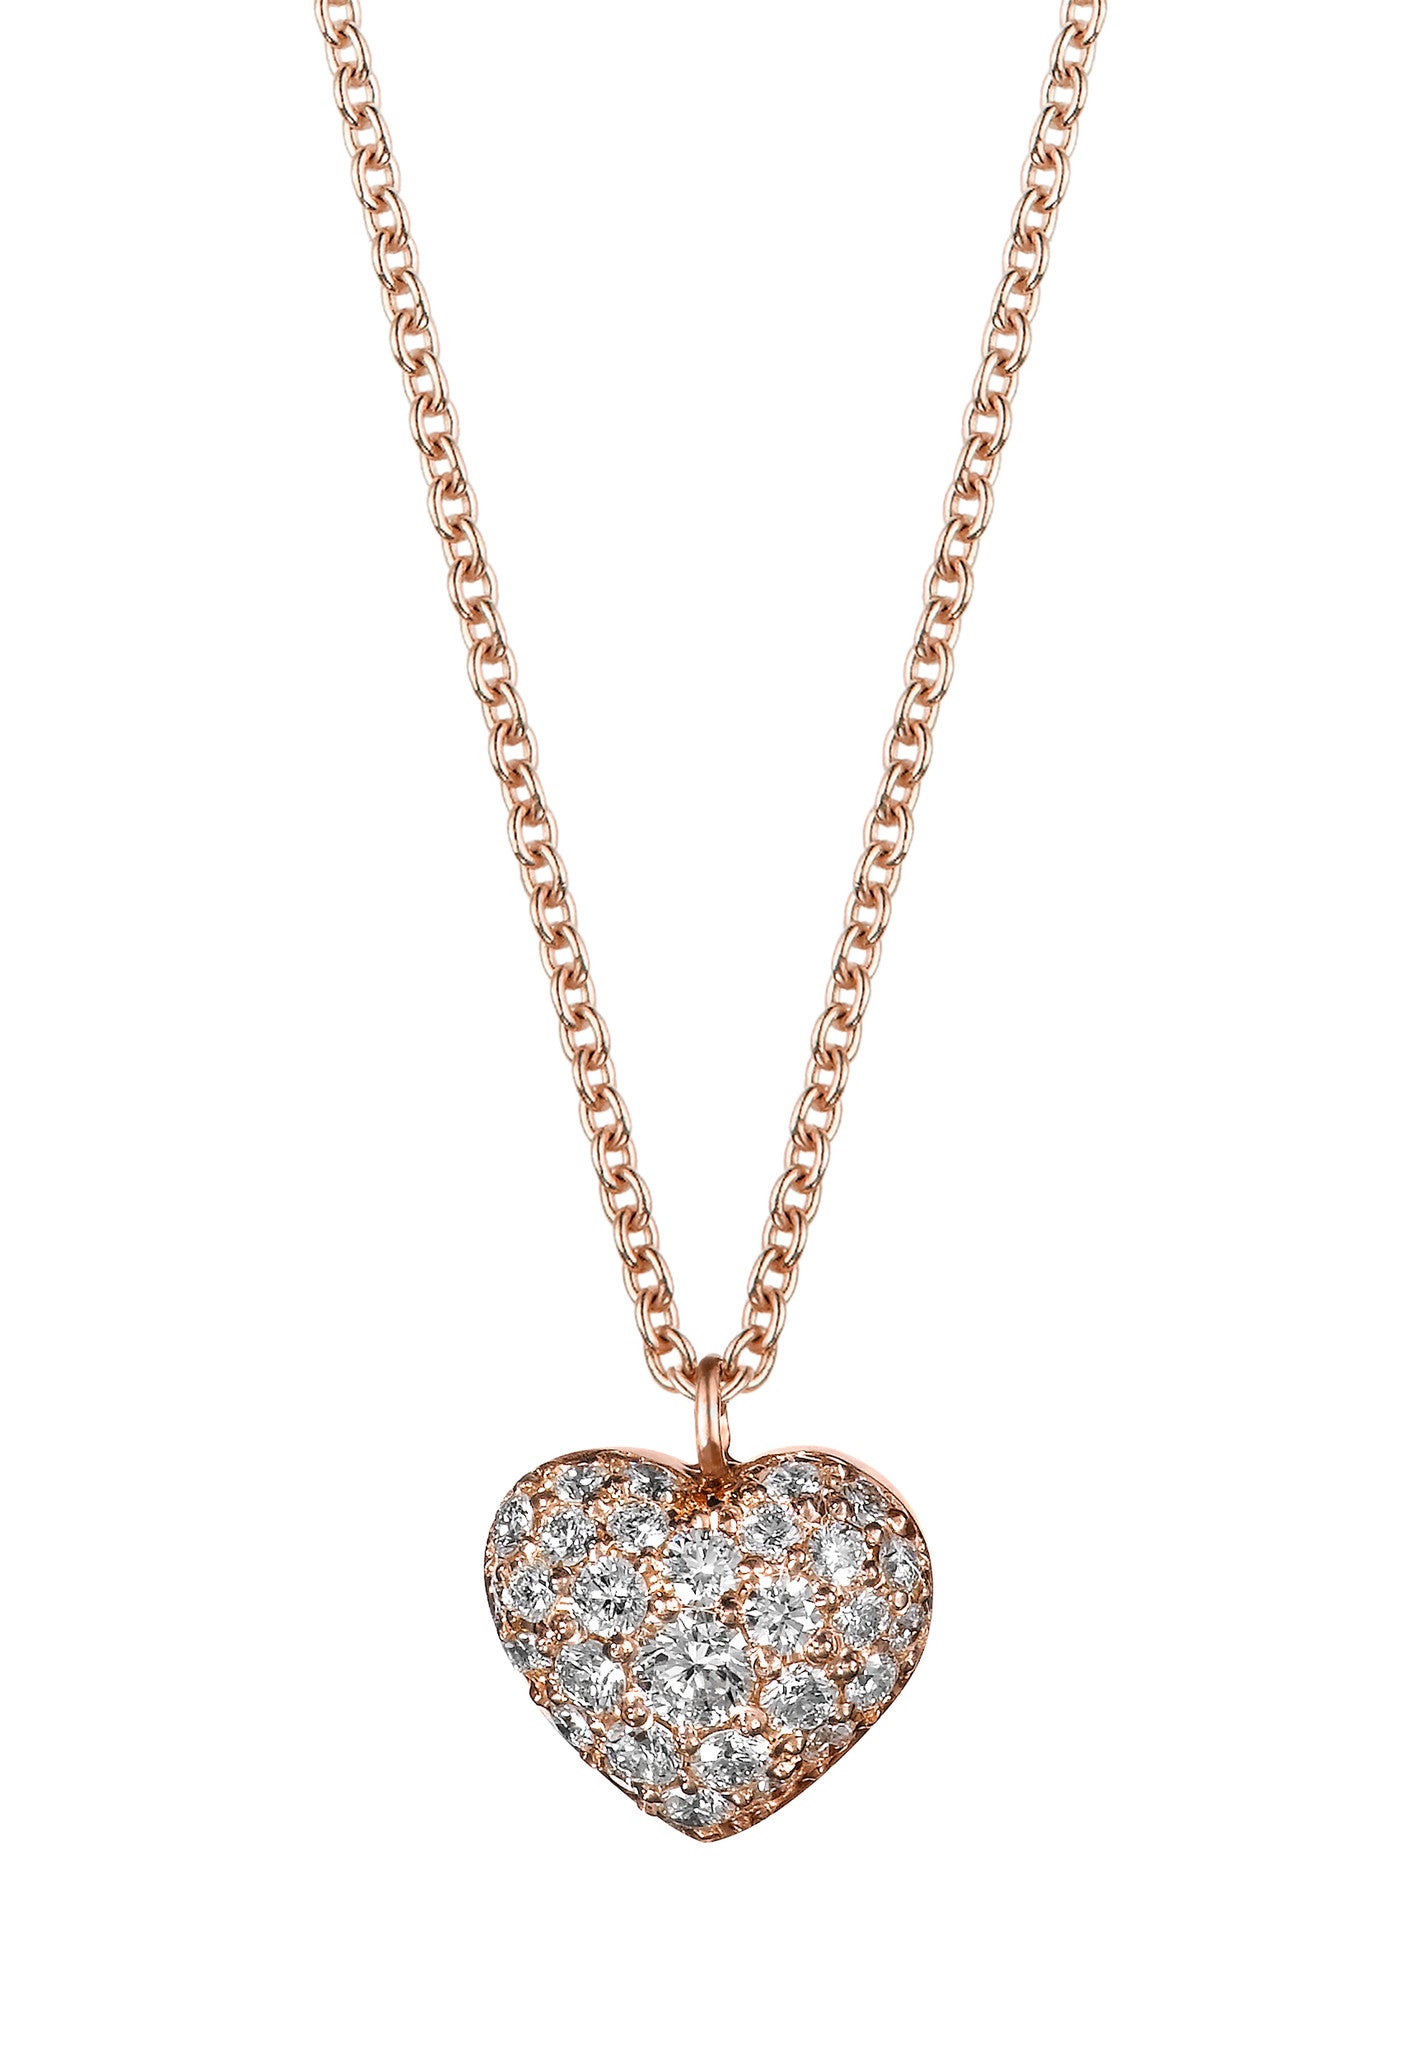 Finn Rose Gold Diamond Heart Necklace by Candice Pool Nesitat